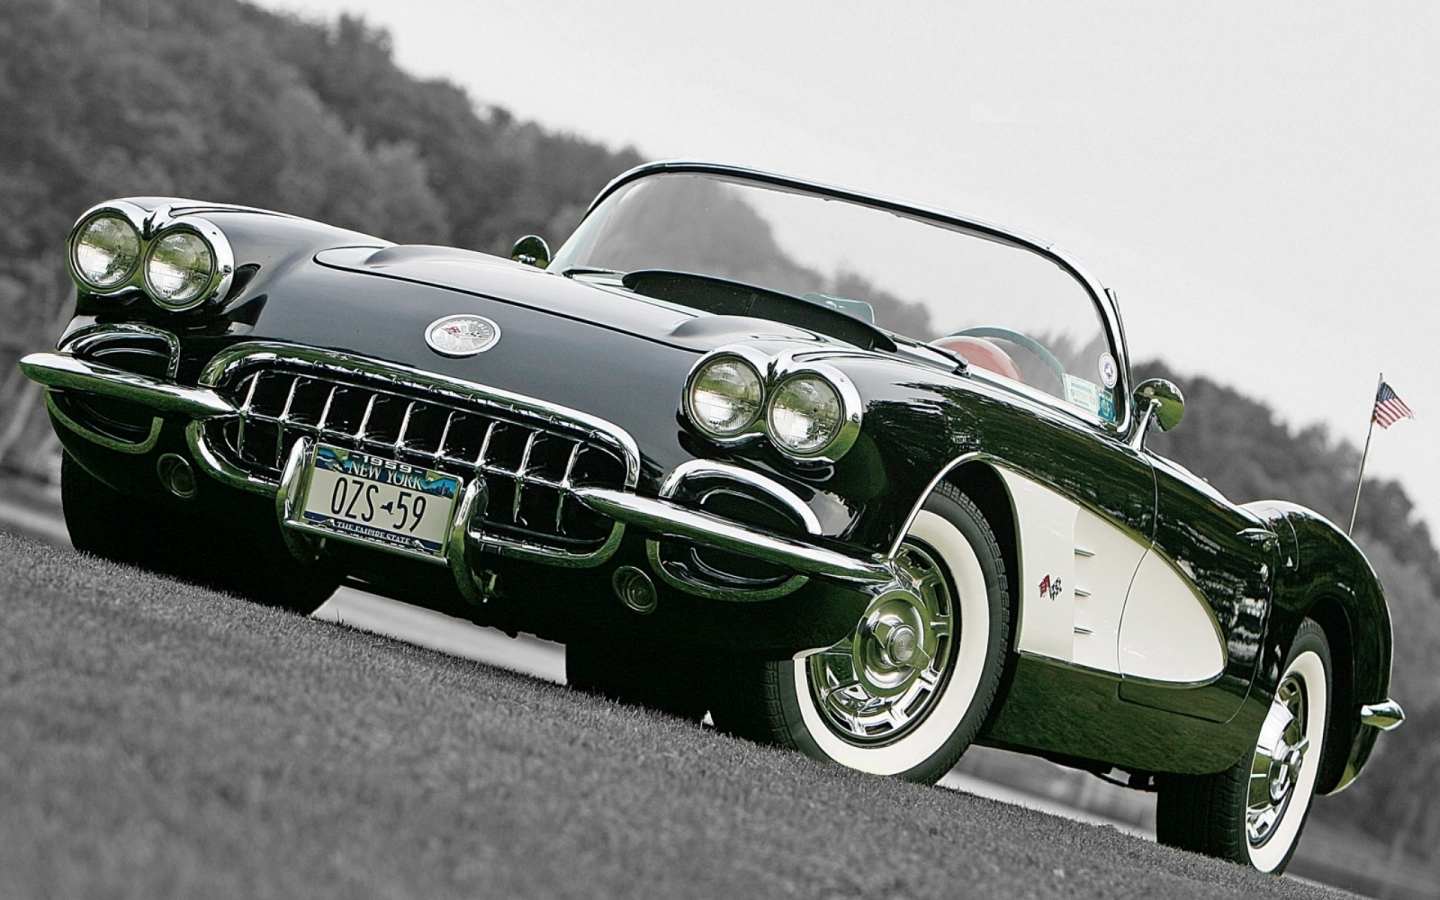 corvette, chevrolet, машина, тачка, car, с1 1953-62, авто